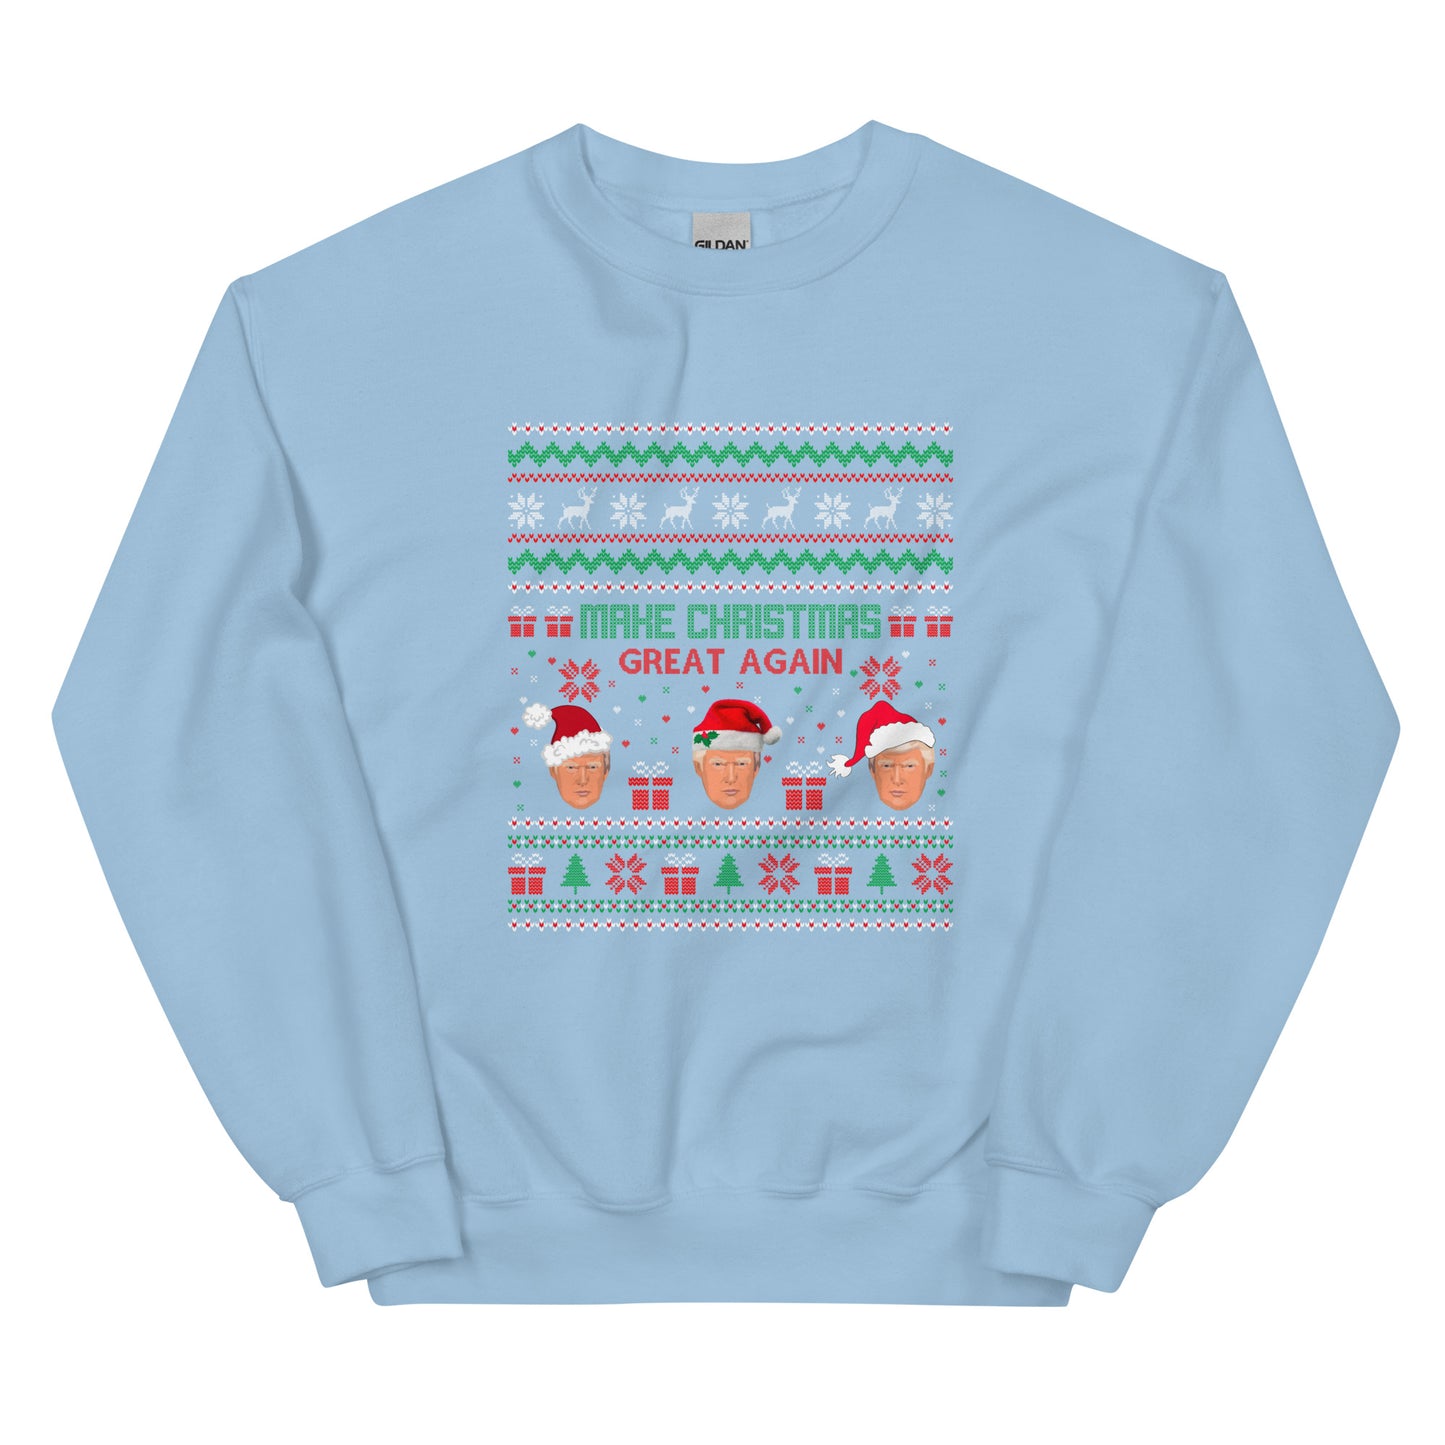 Make Christmas Great Again Crewneck Sweatshirt